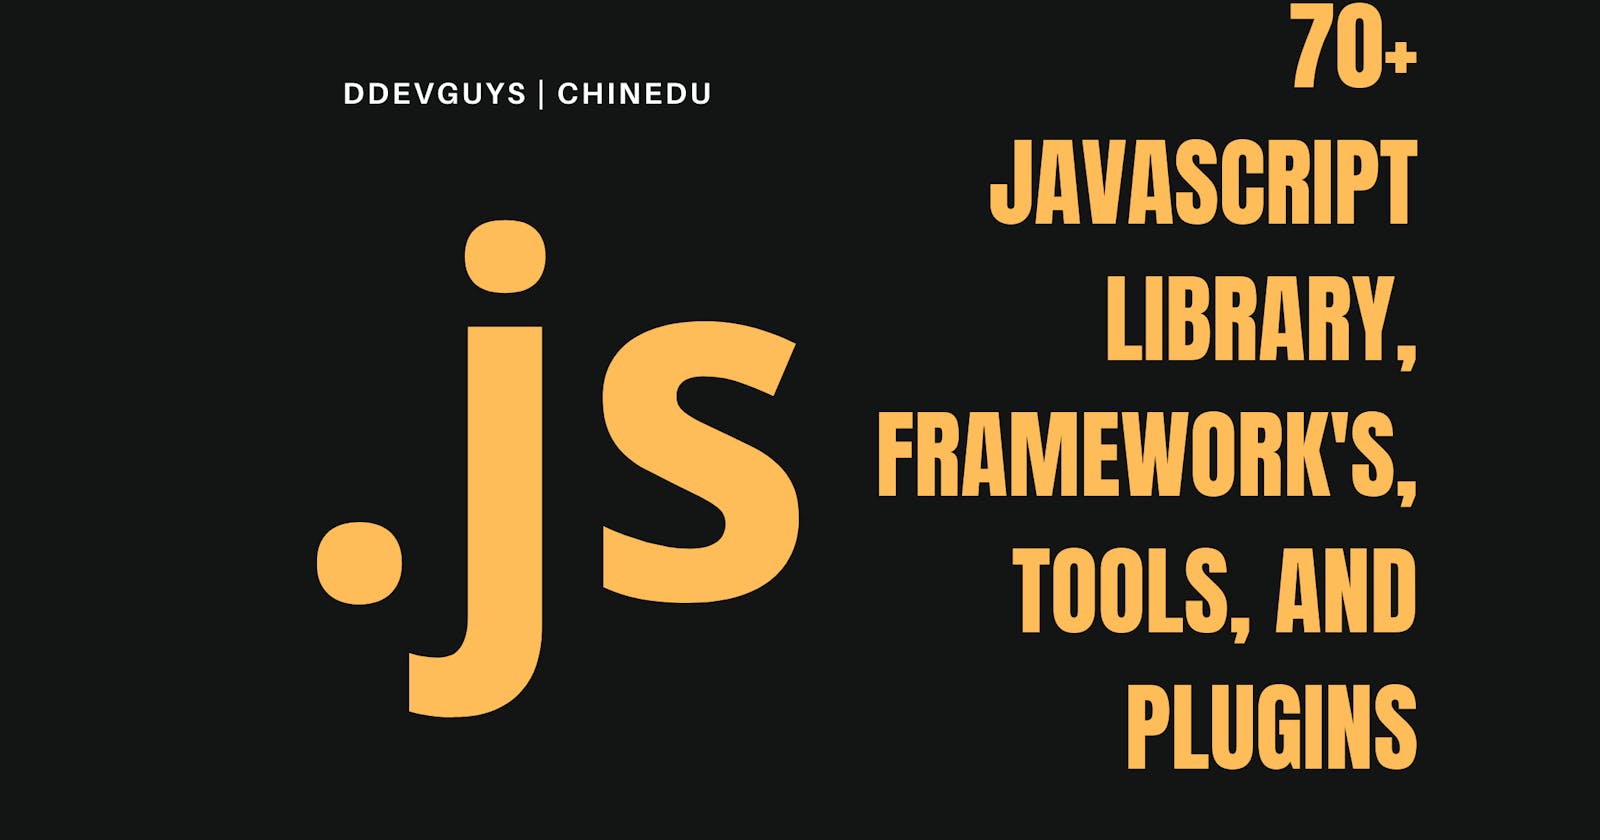 70+ JavaScript library, frameworks, tools, and plugins